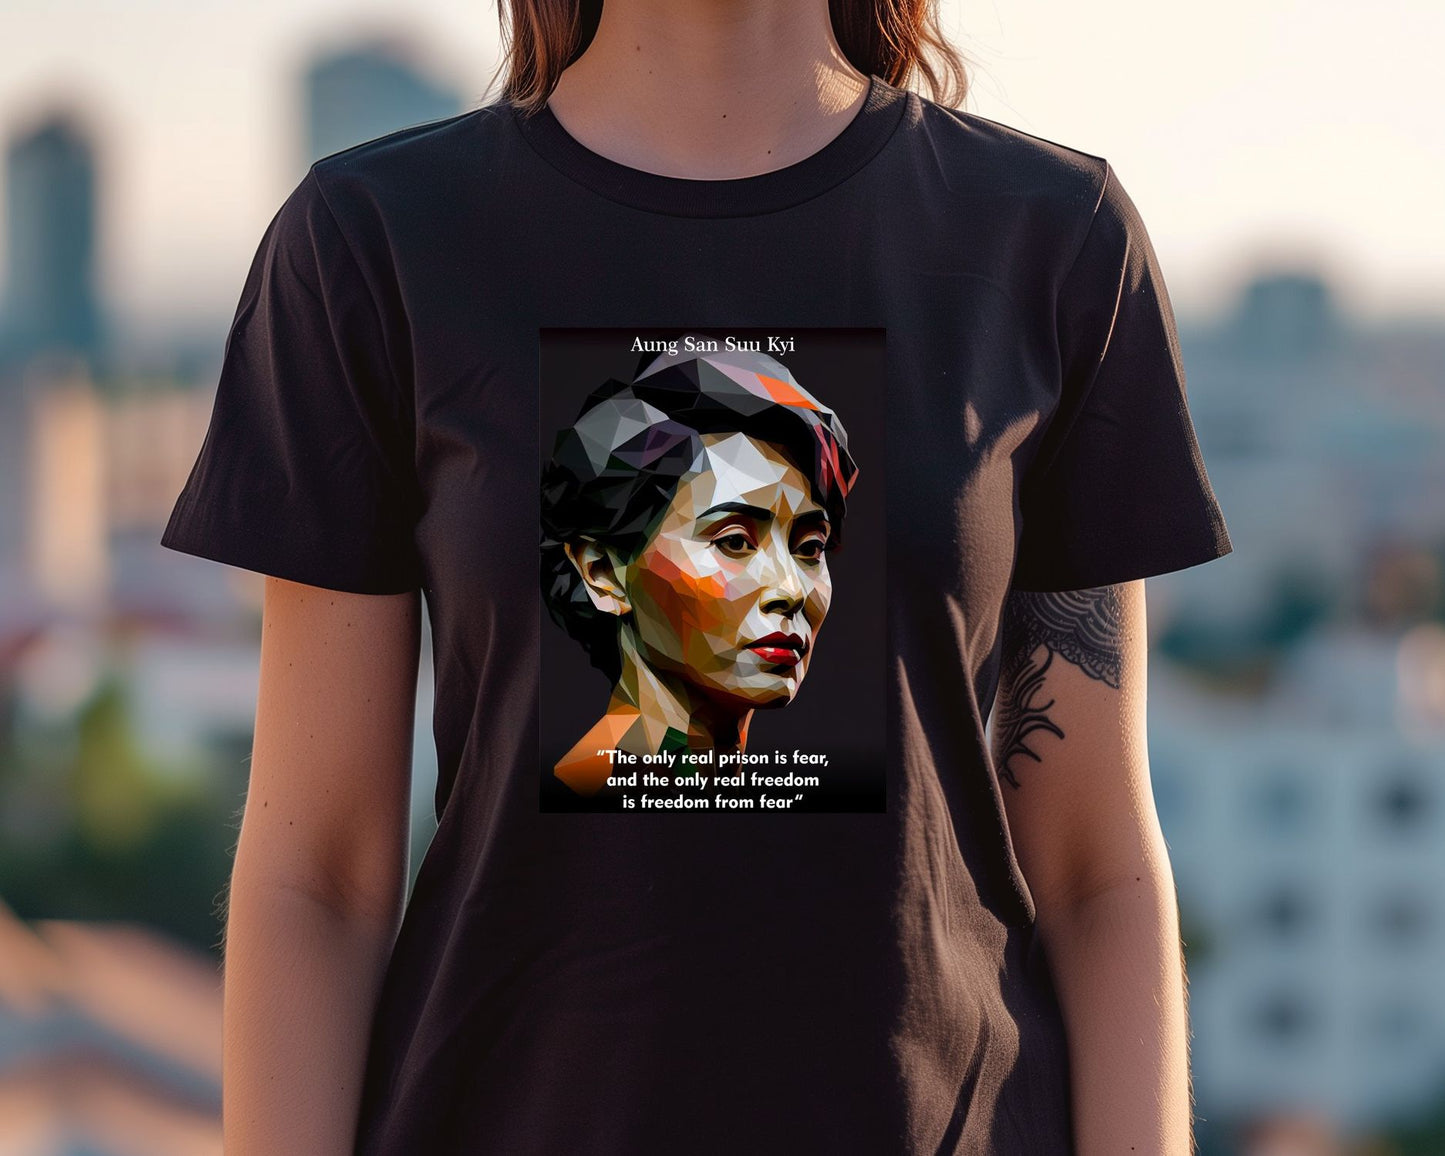 Aung San Suu Kyi Quotes - @WpapArtist